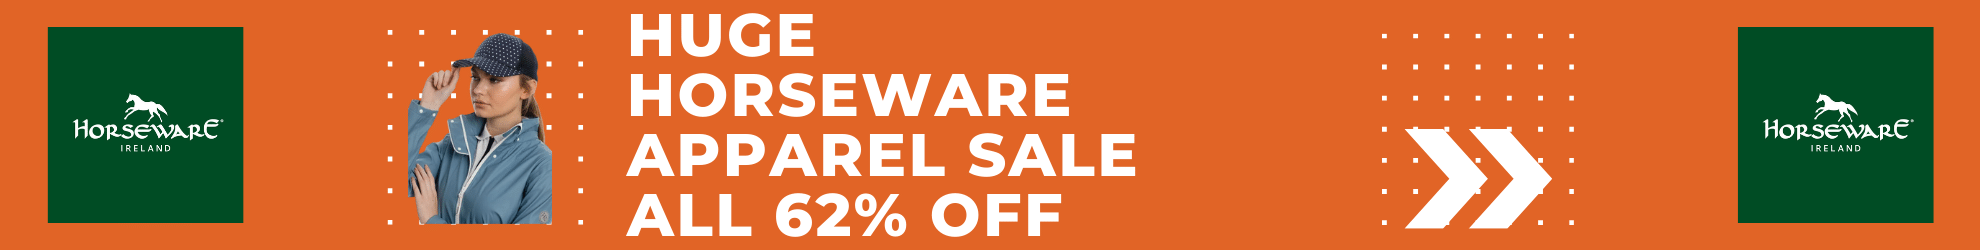 Horseware Apparel Sale - All 62% Off